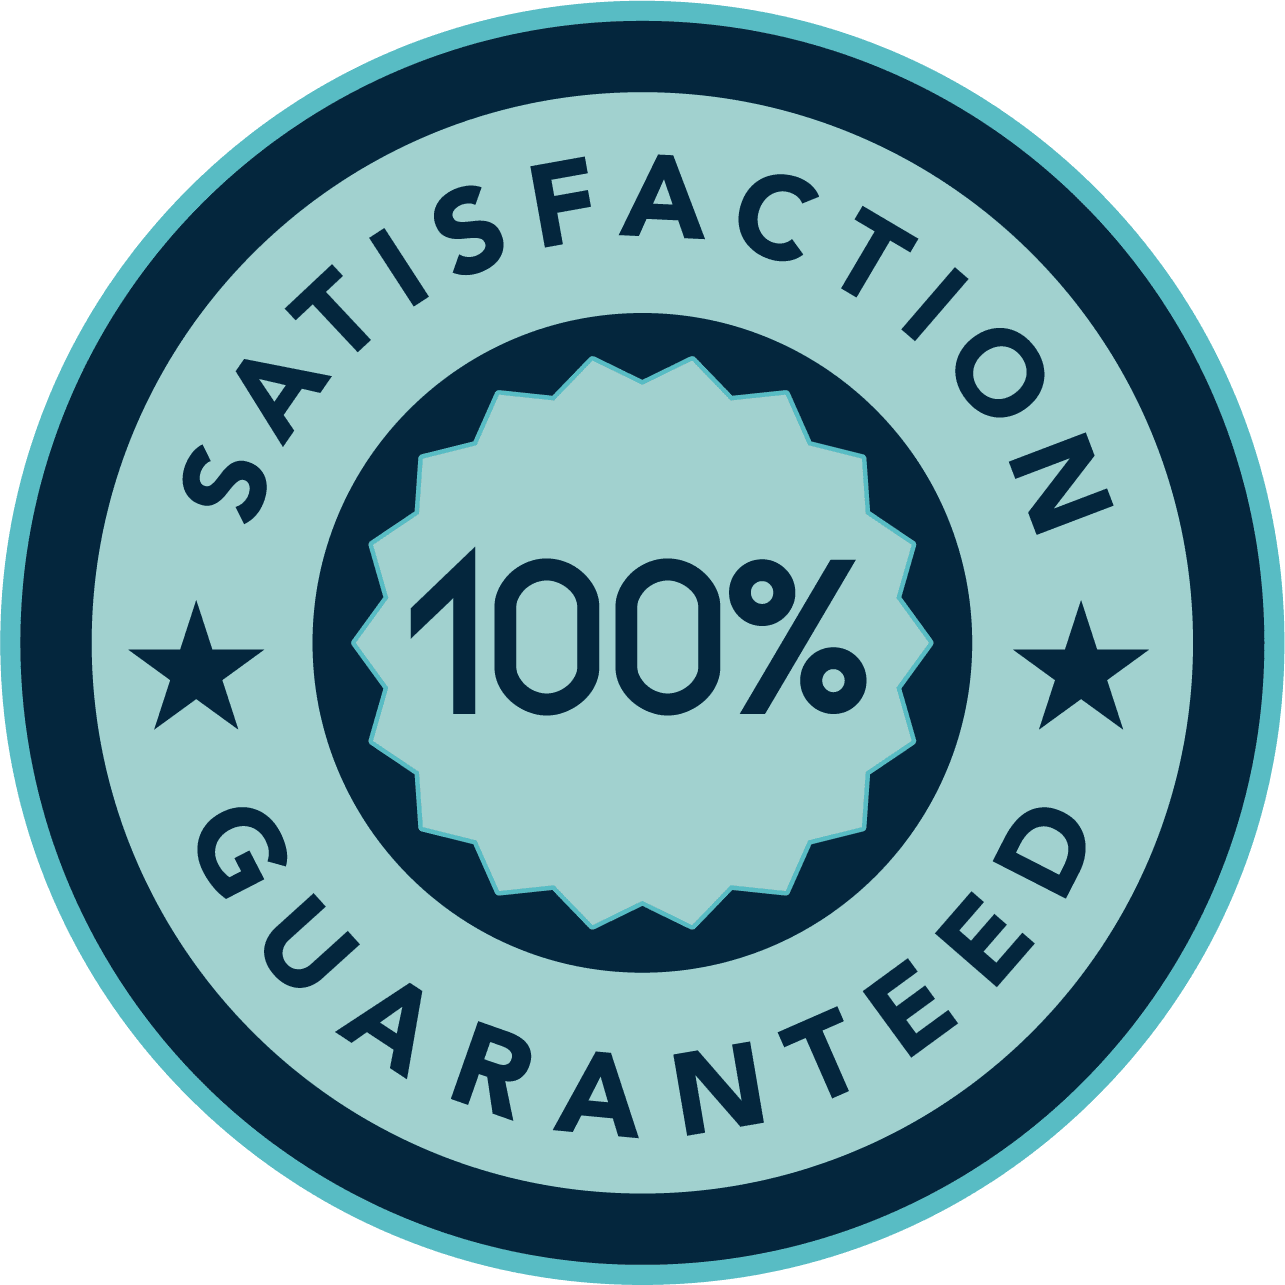 satisfaction-guaranteed-seal